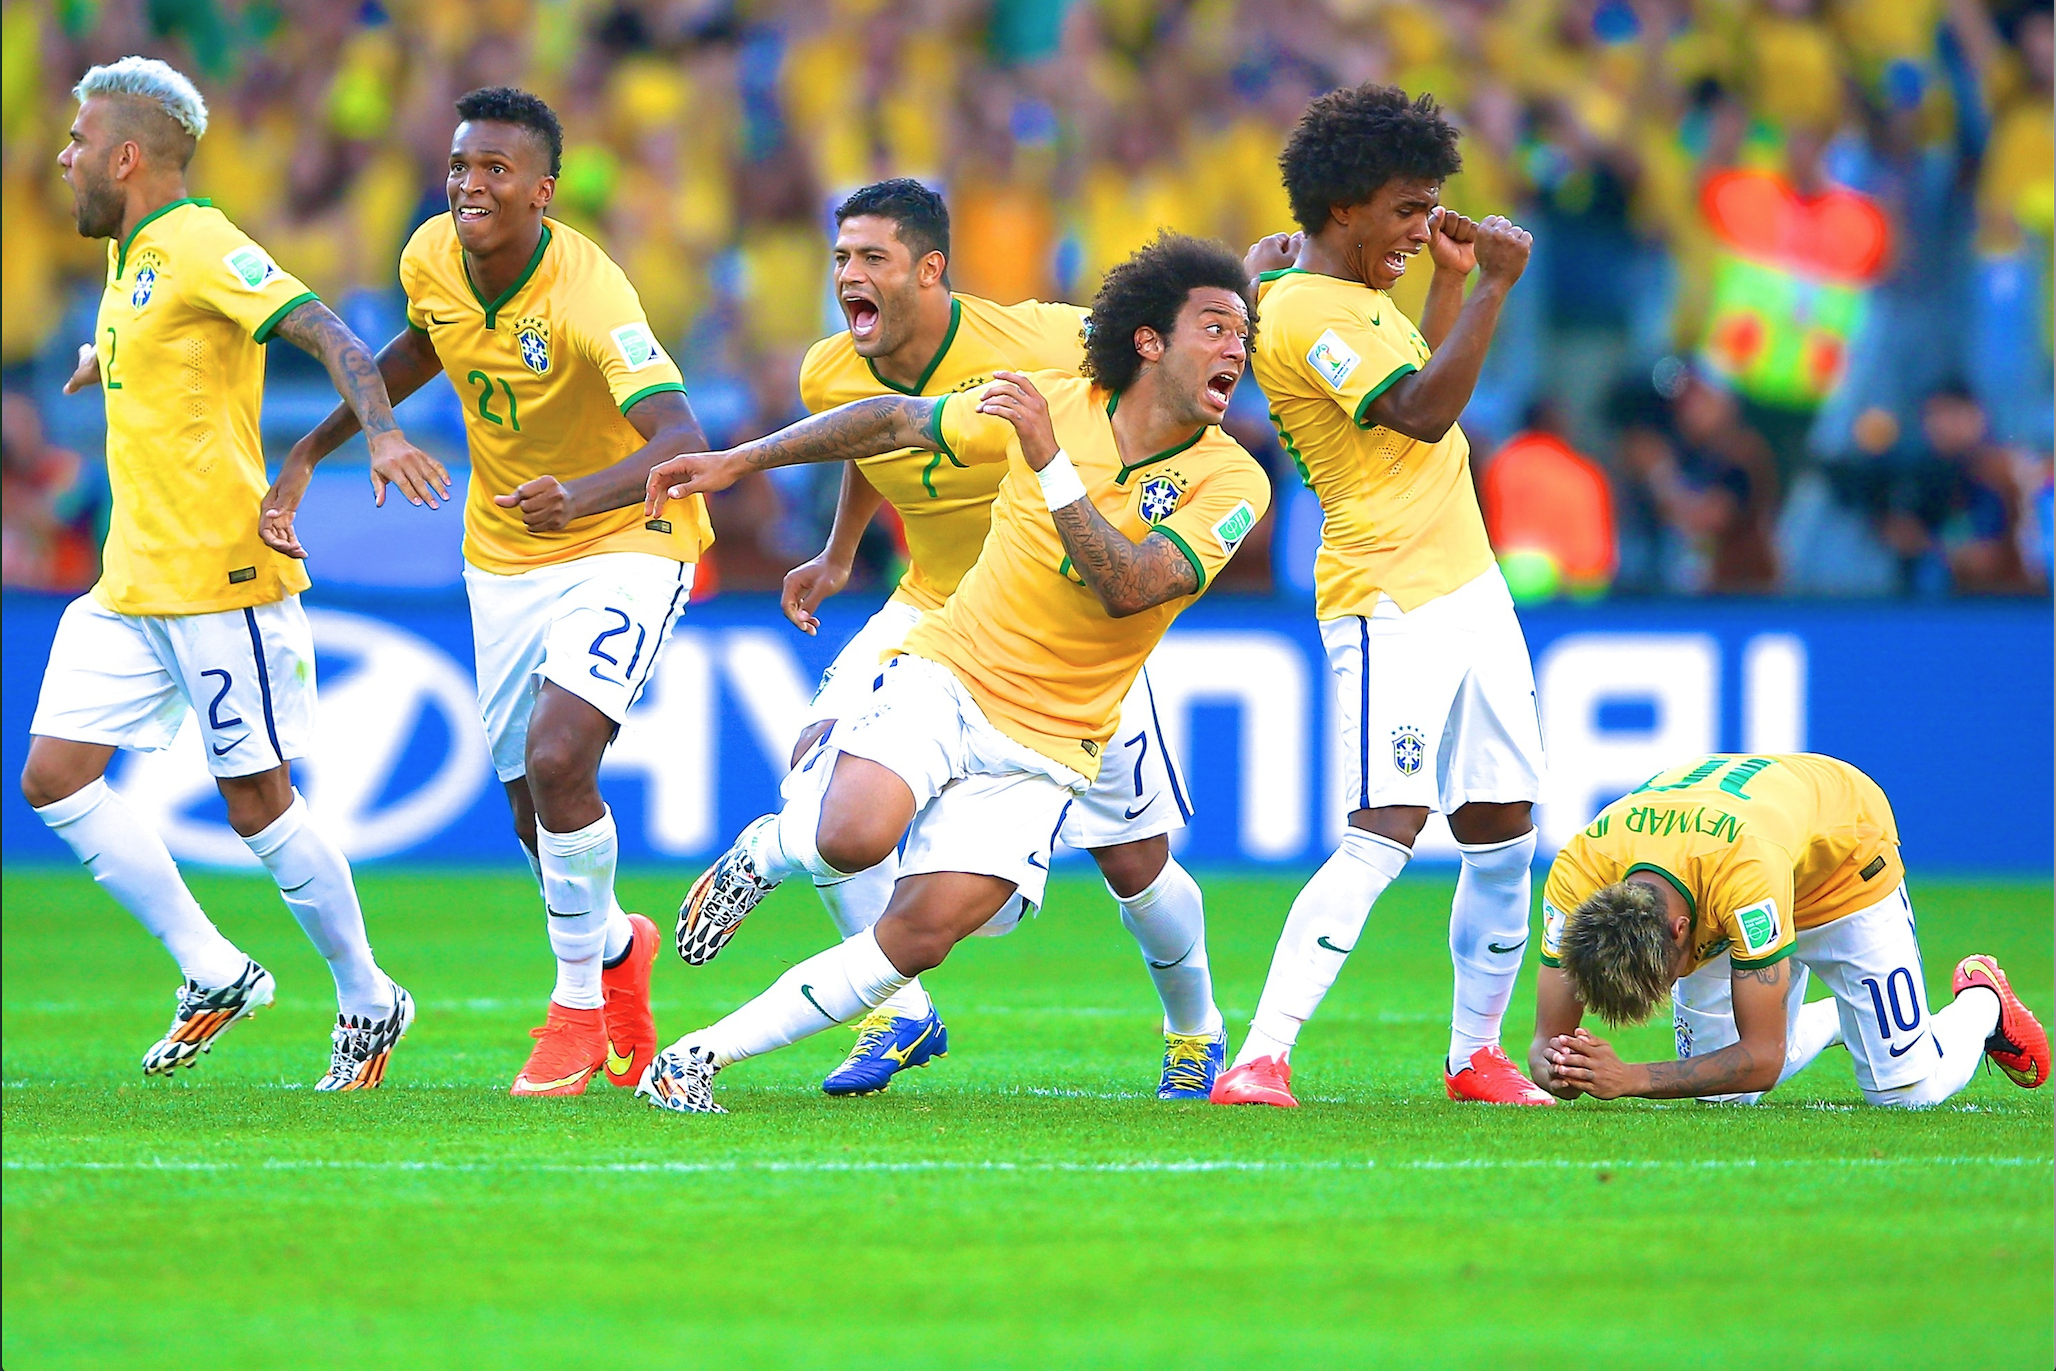 File:Brazil vs Chile (16997642336).jpg - Wikimedia Commons